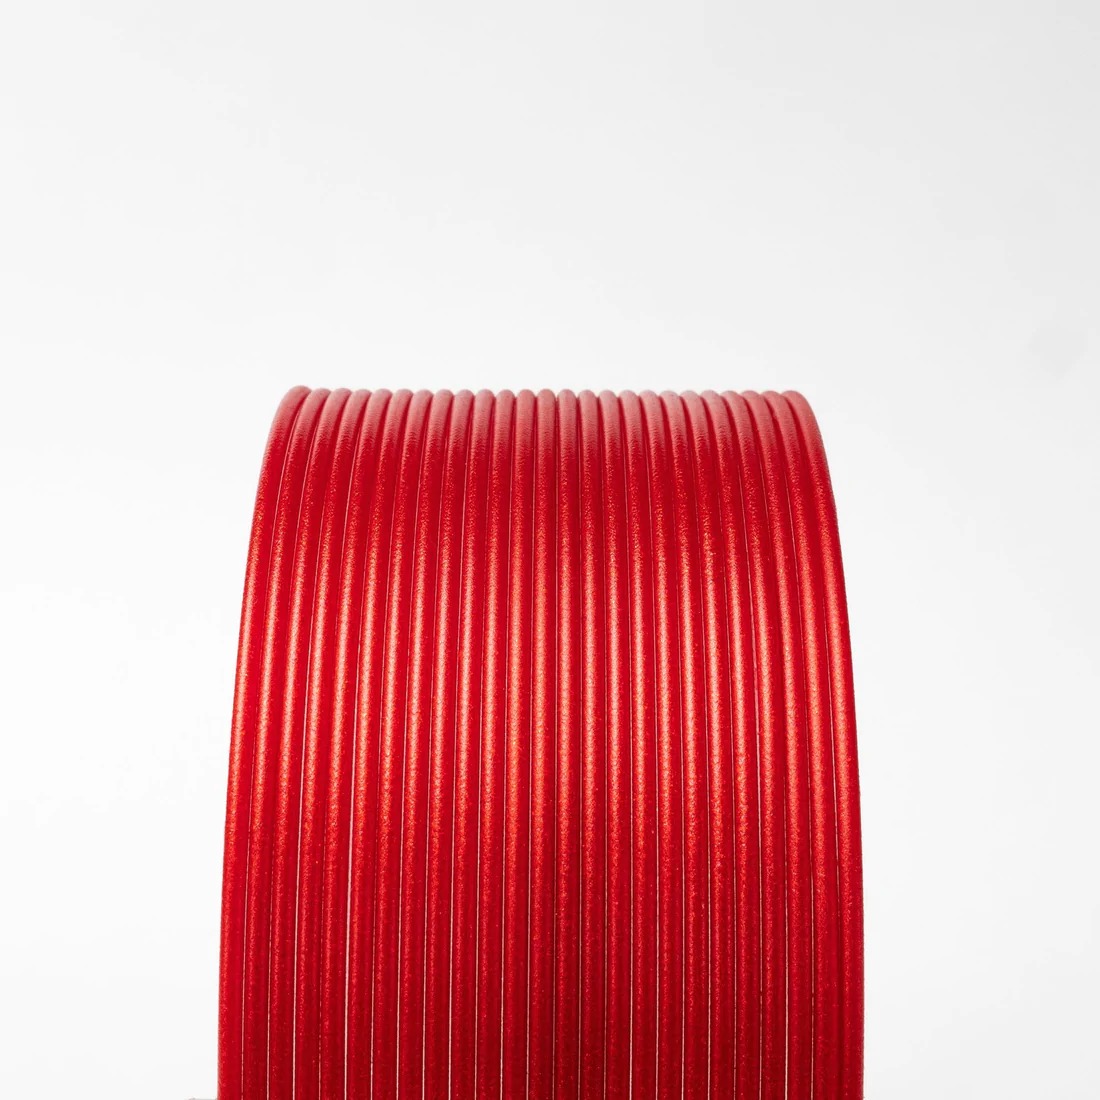 Candy Apple Metallic Red HTPLA  1.75mm 3D printing filament